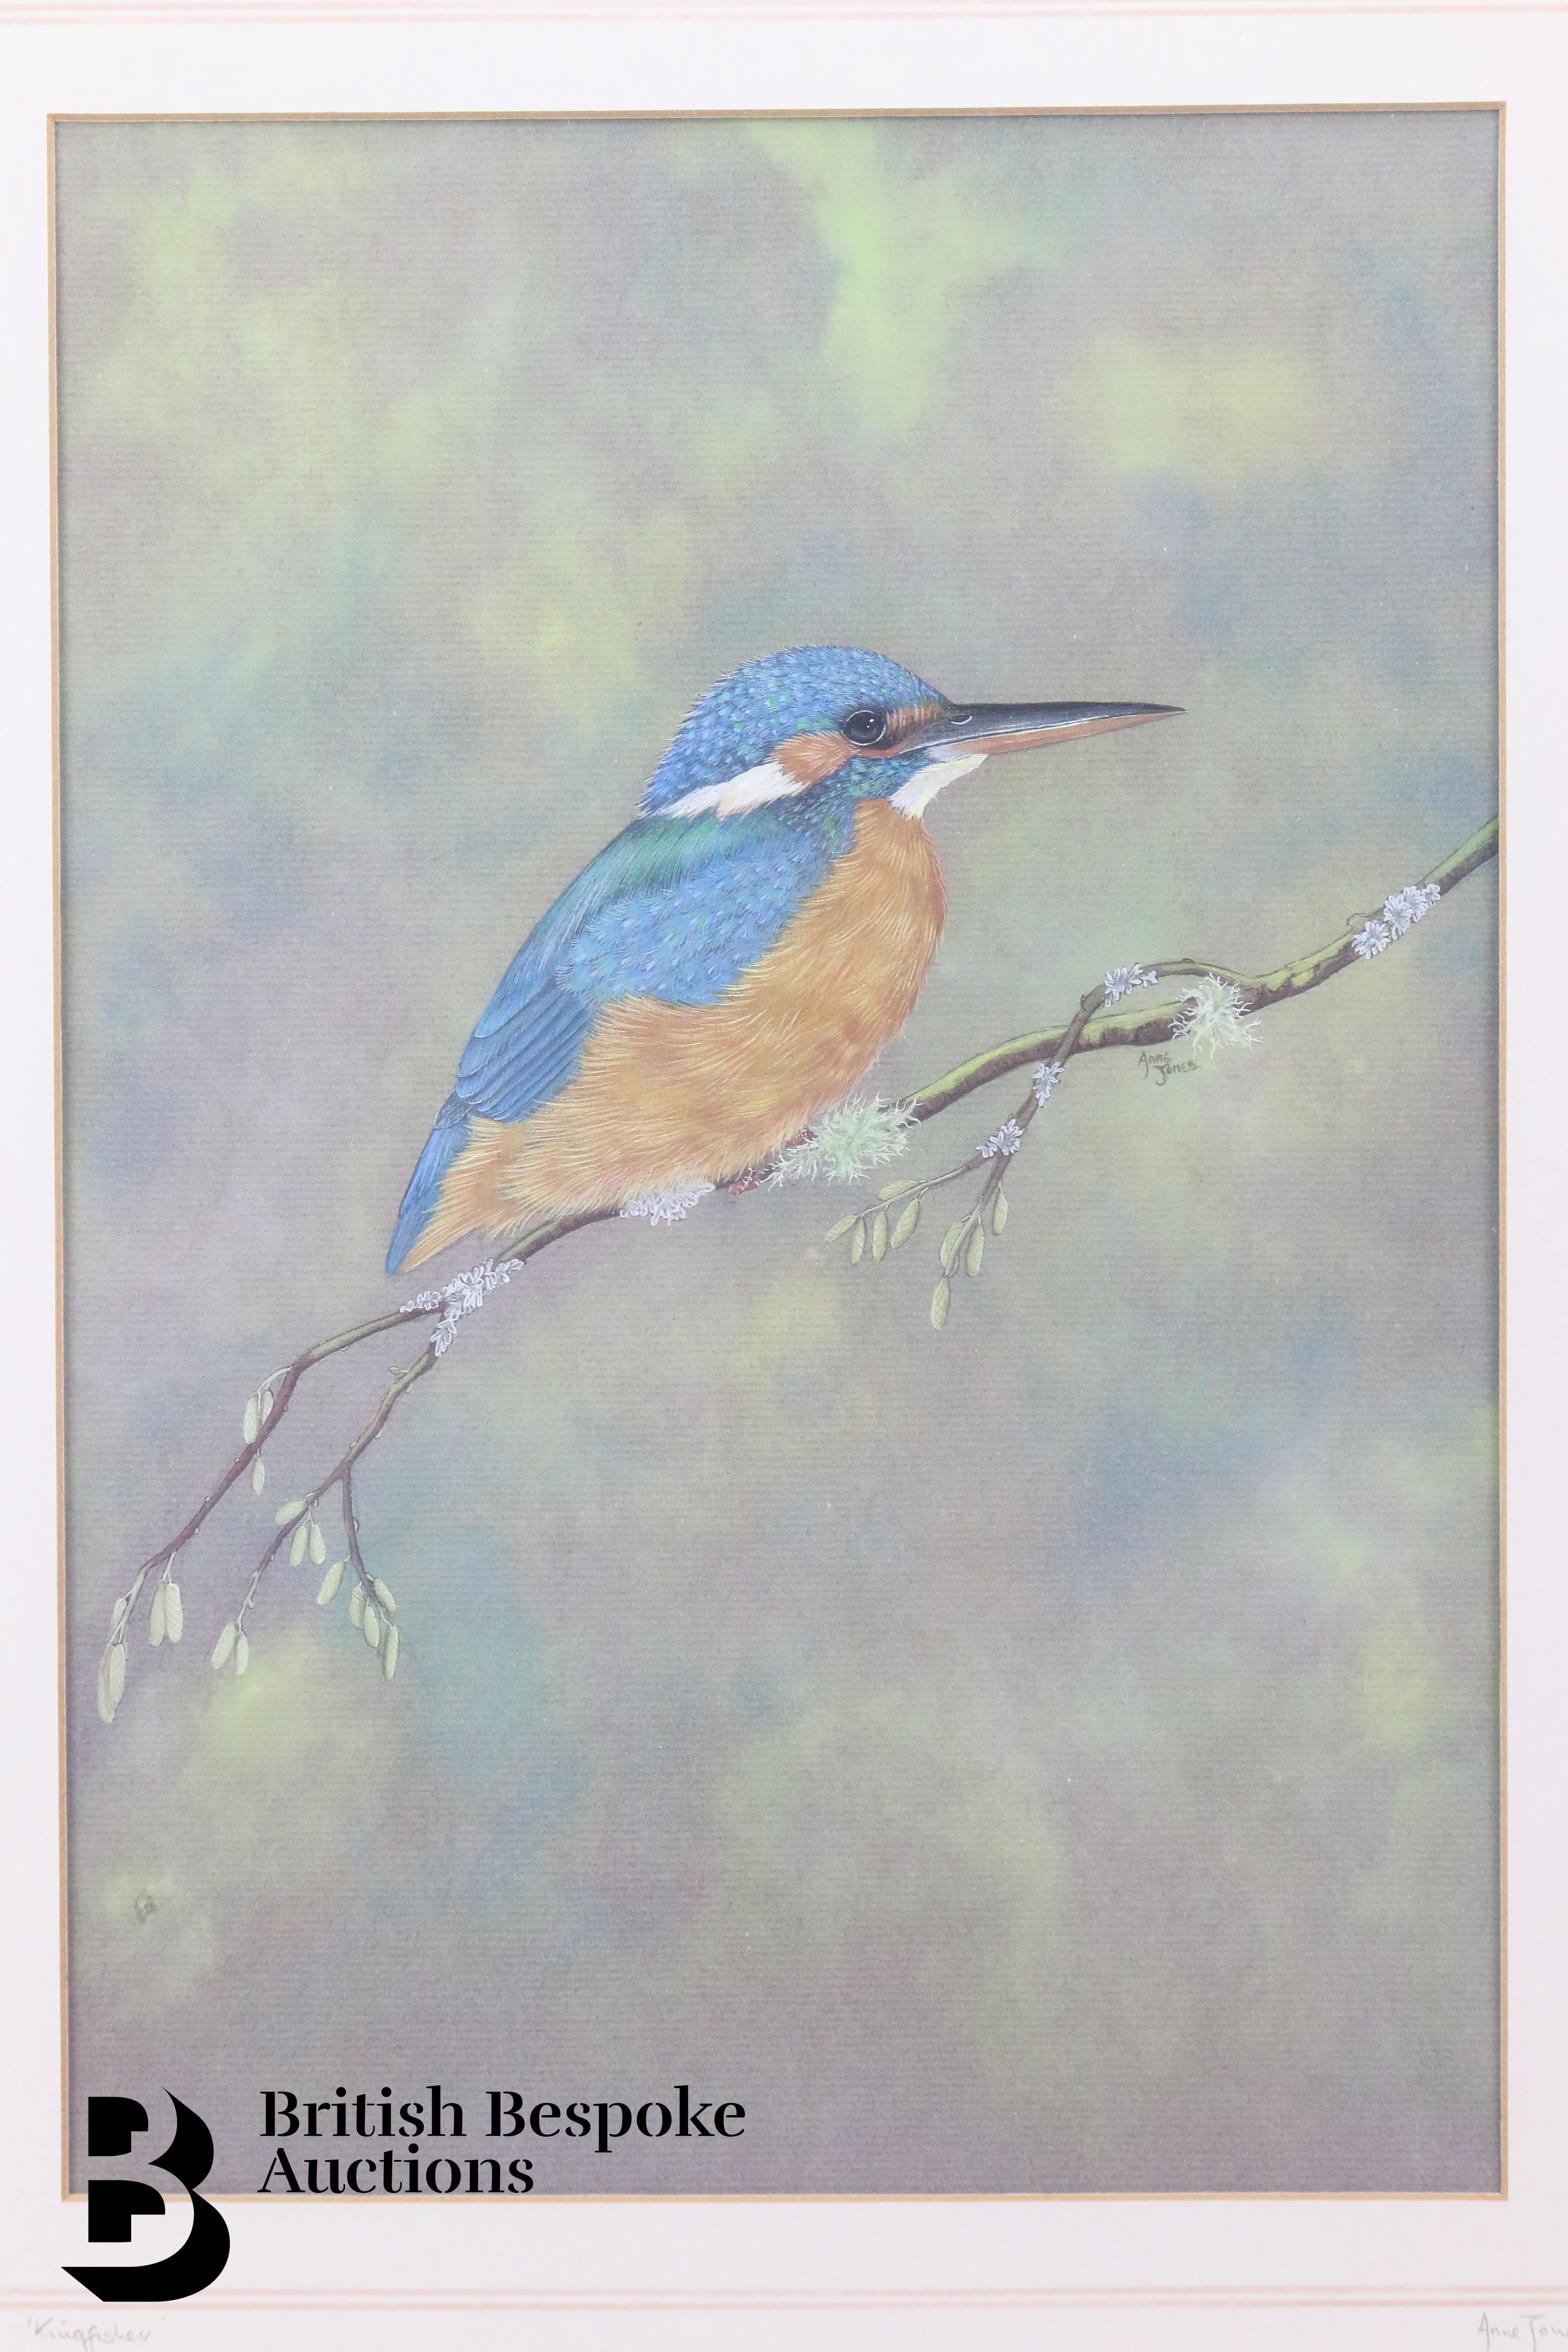 Print of Kingfisher - Image 2 of 2